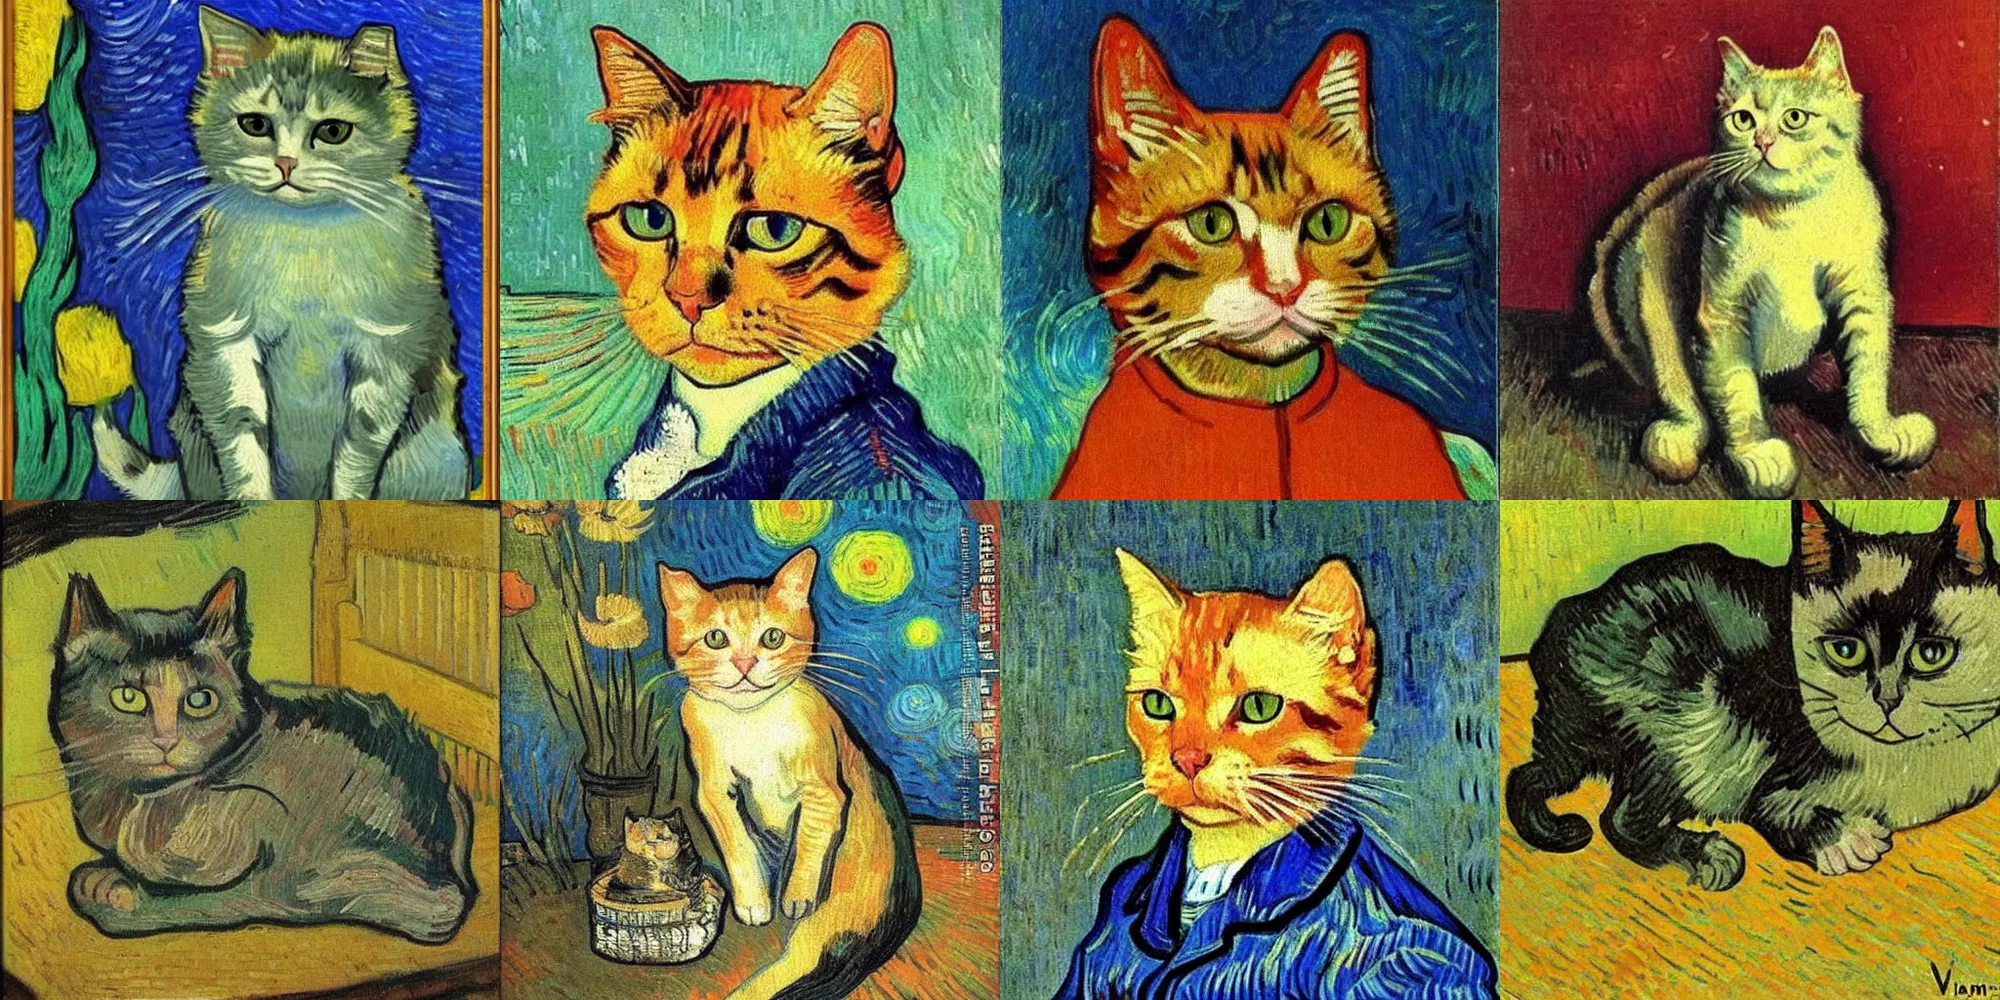 Prompt: meme cat by van gogh, oil panting on canvas